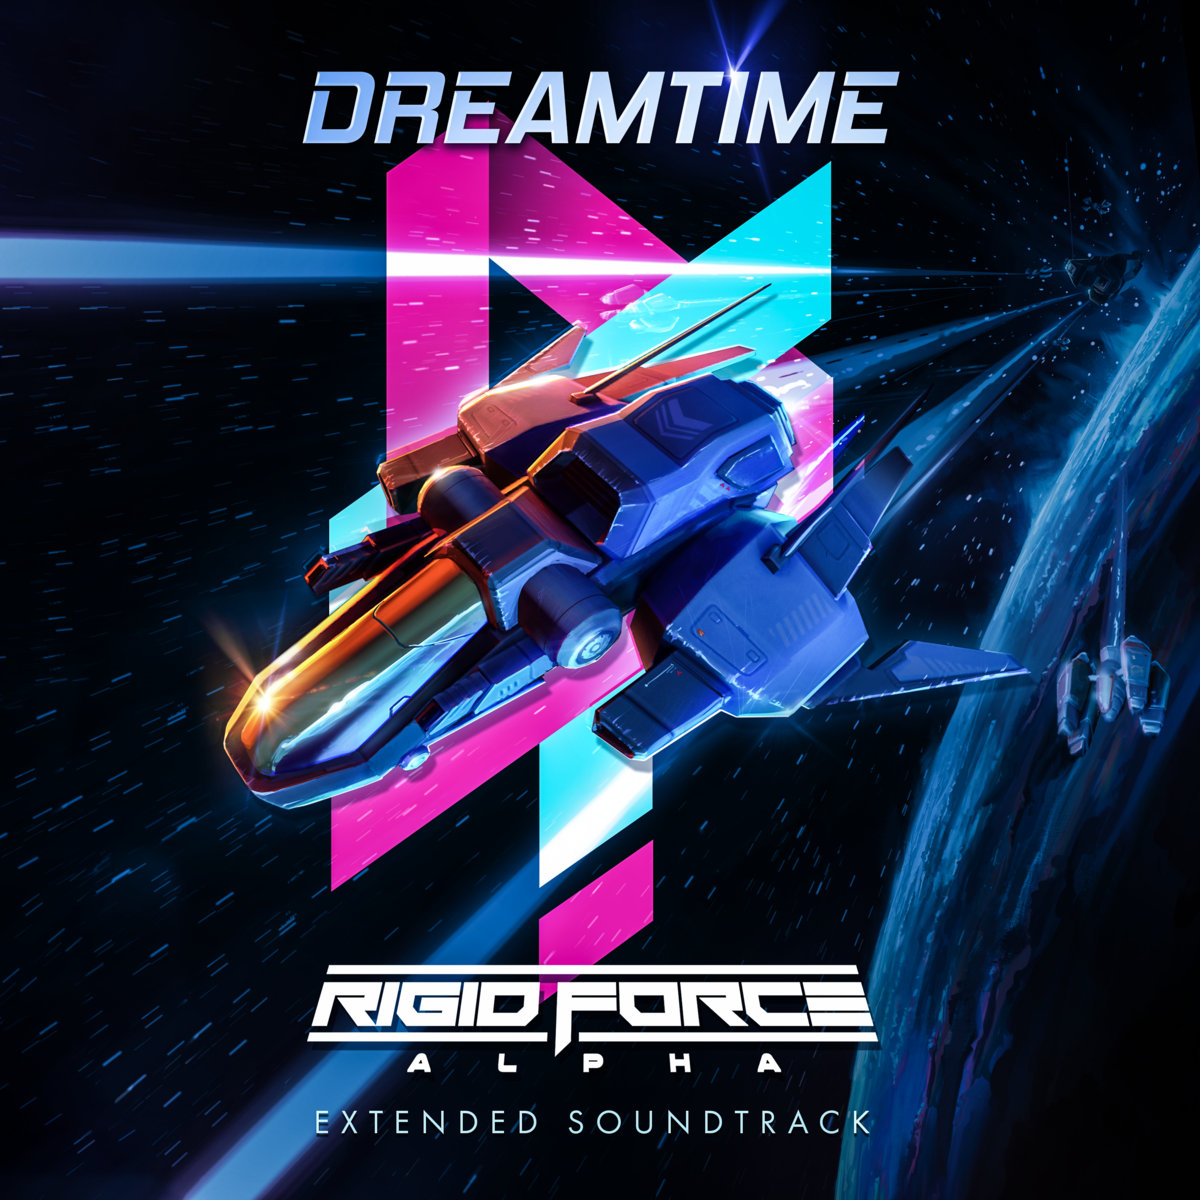 Dreamtime – Rigid Force Alpha: Extended Soundtrack (2019) [FLAC 24bit/44,1kHz]